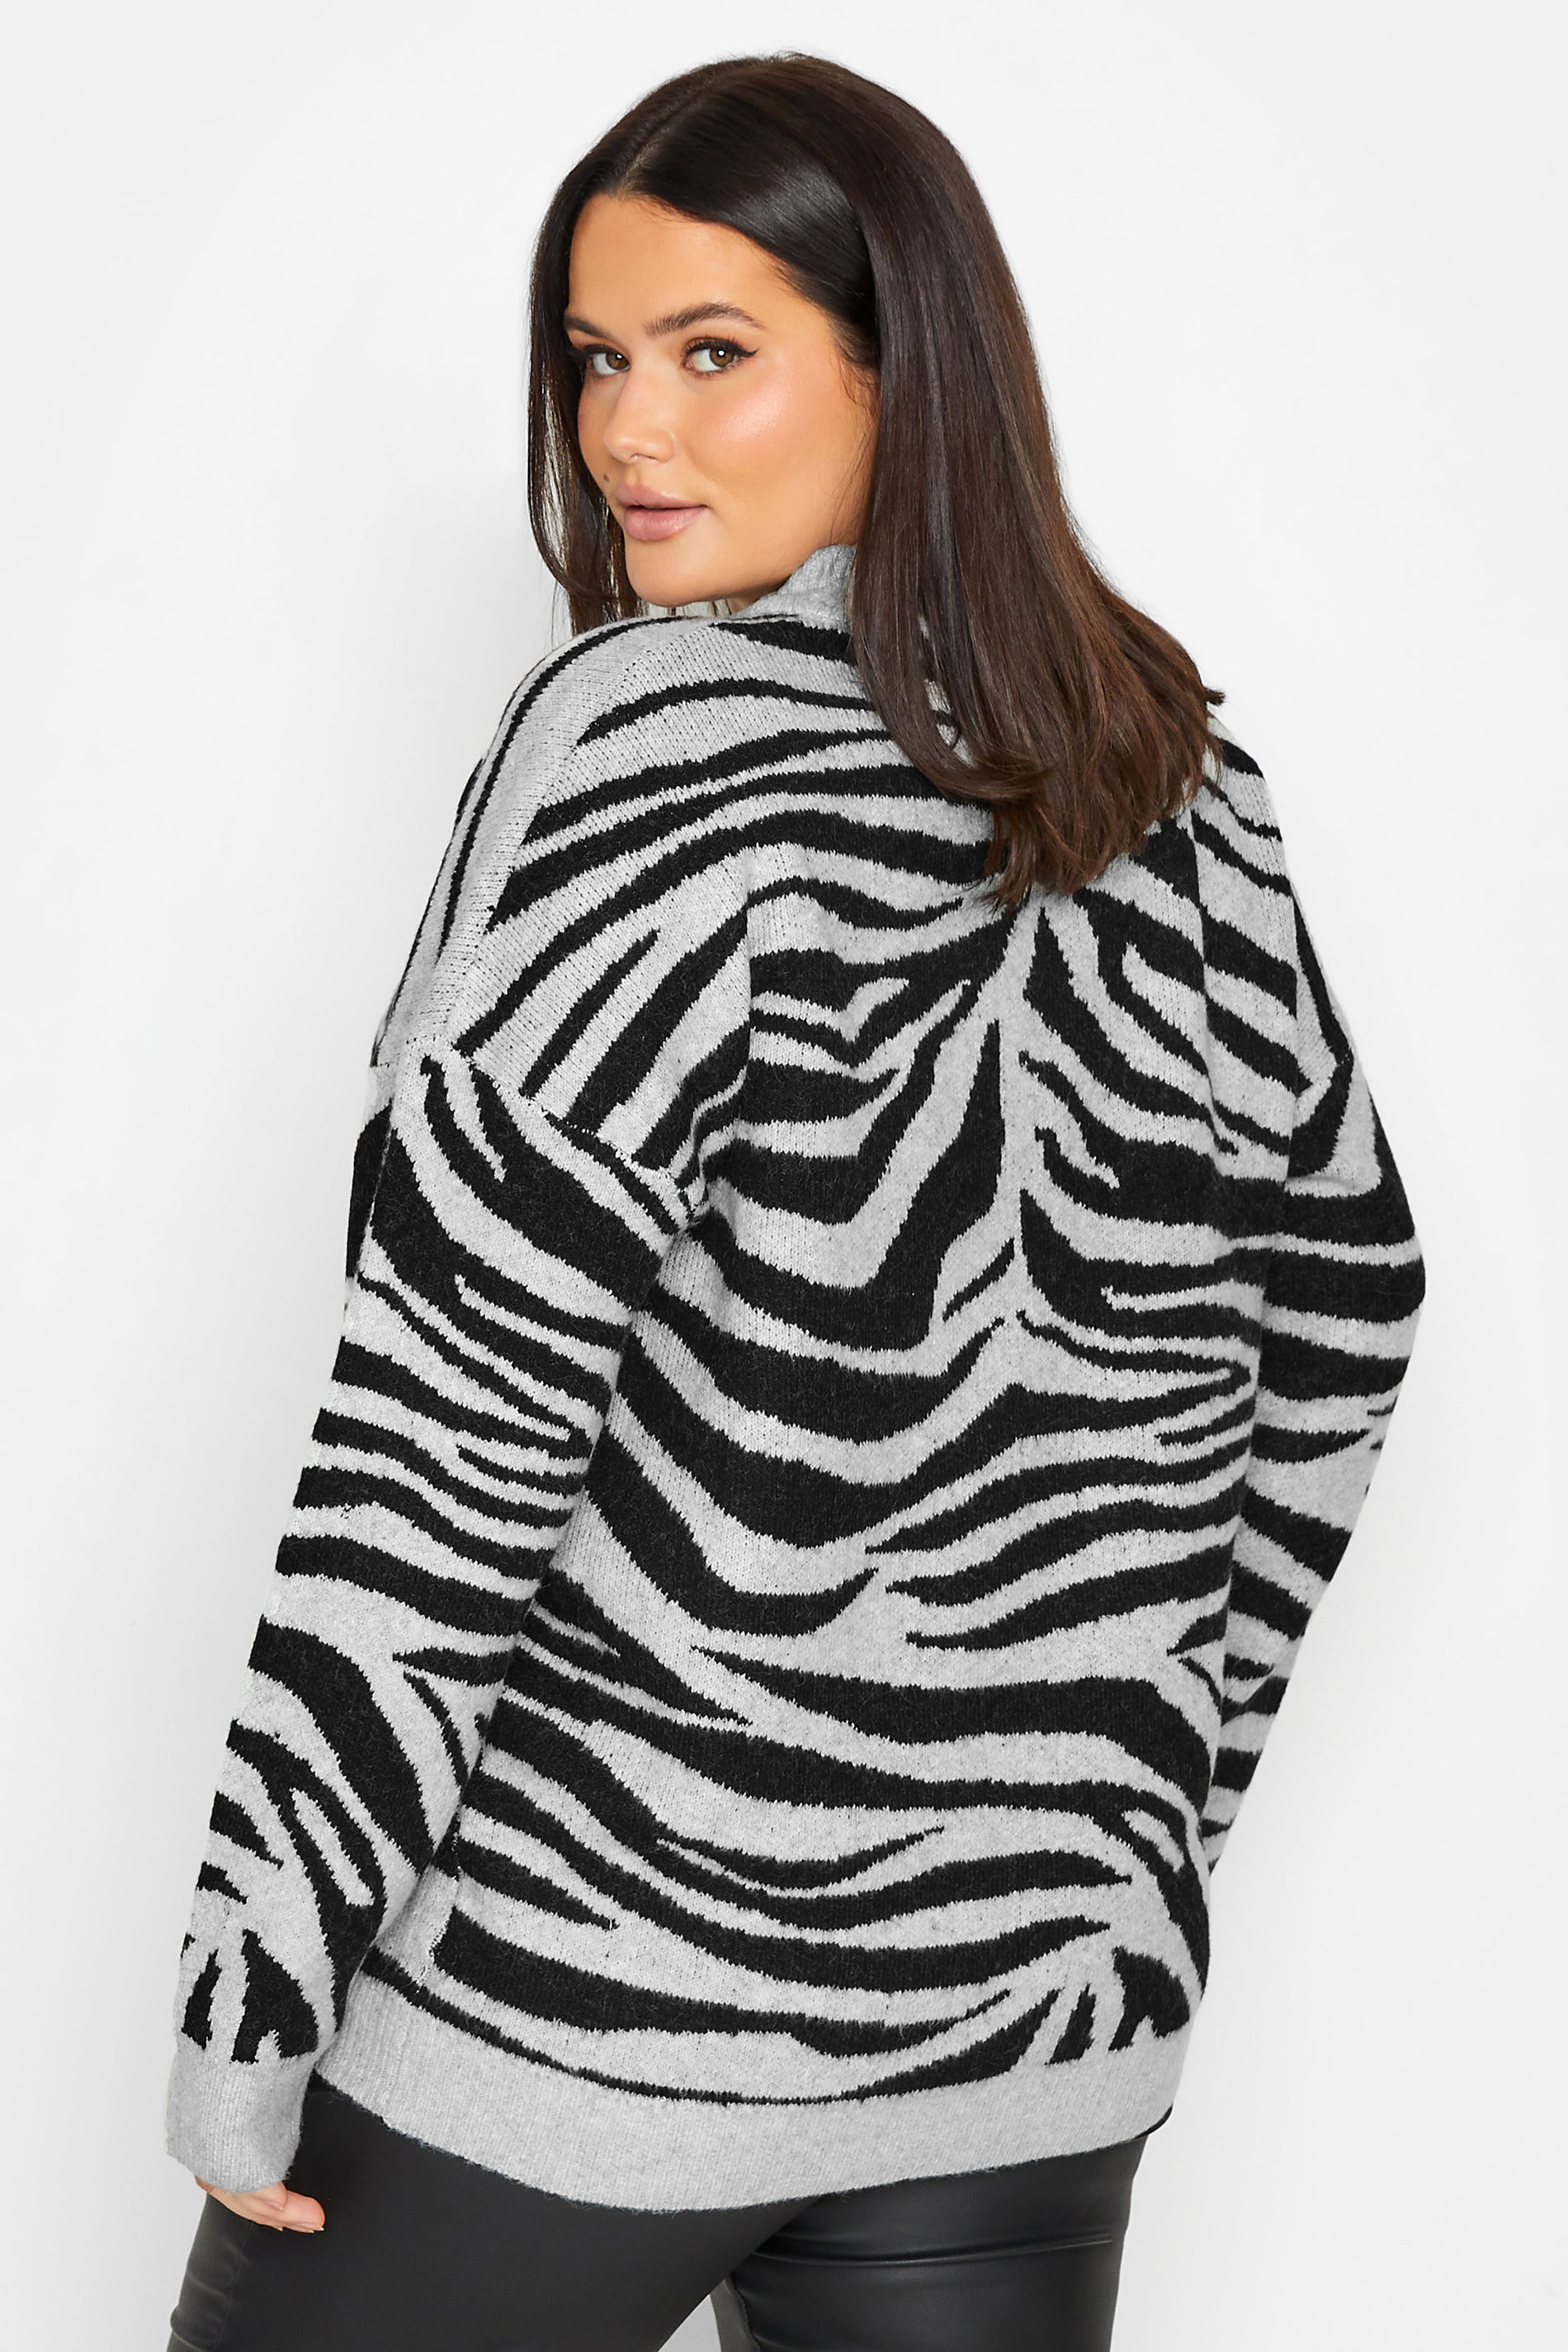 LTS Tall Women's Grey Zebra Print Knit Jumper | Long Tall Sally 3